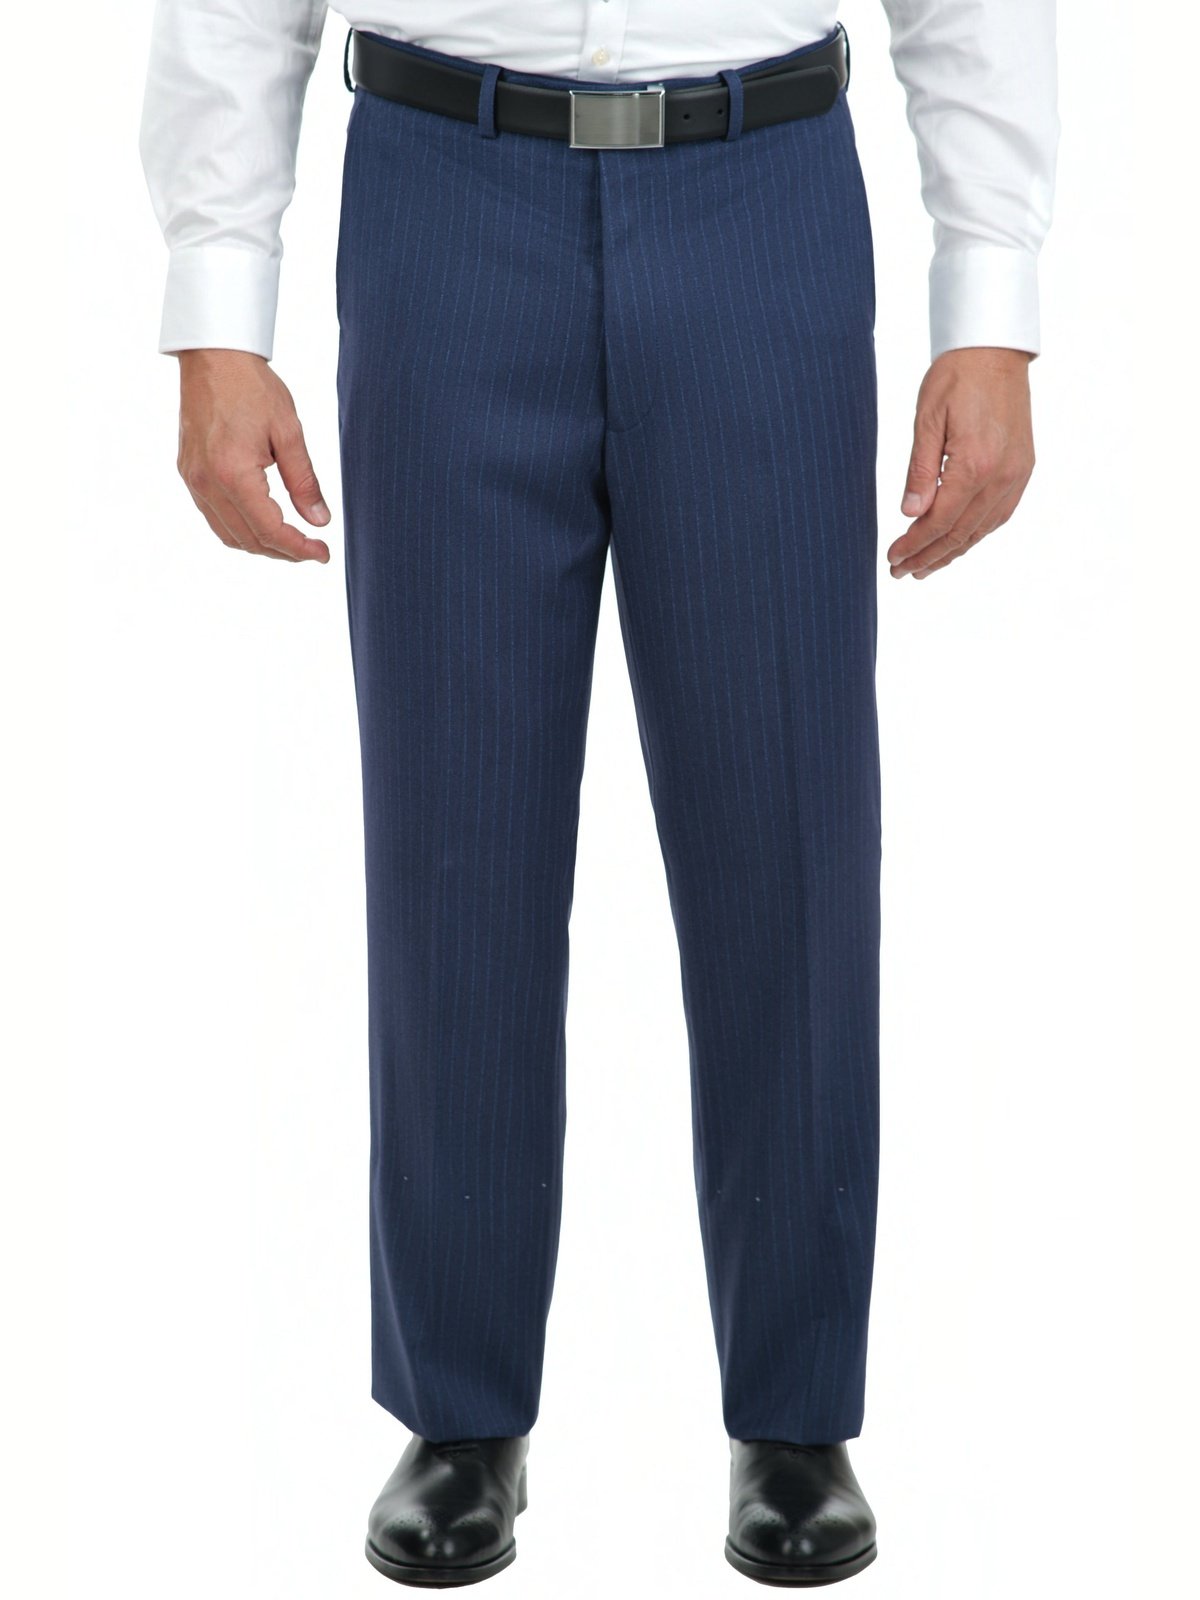 Caravelli Caravelli Mens Blue Striped Two Button 2 Piece Suit